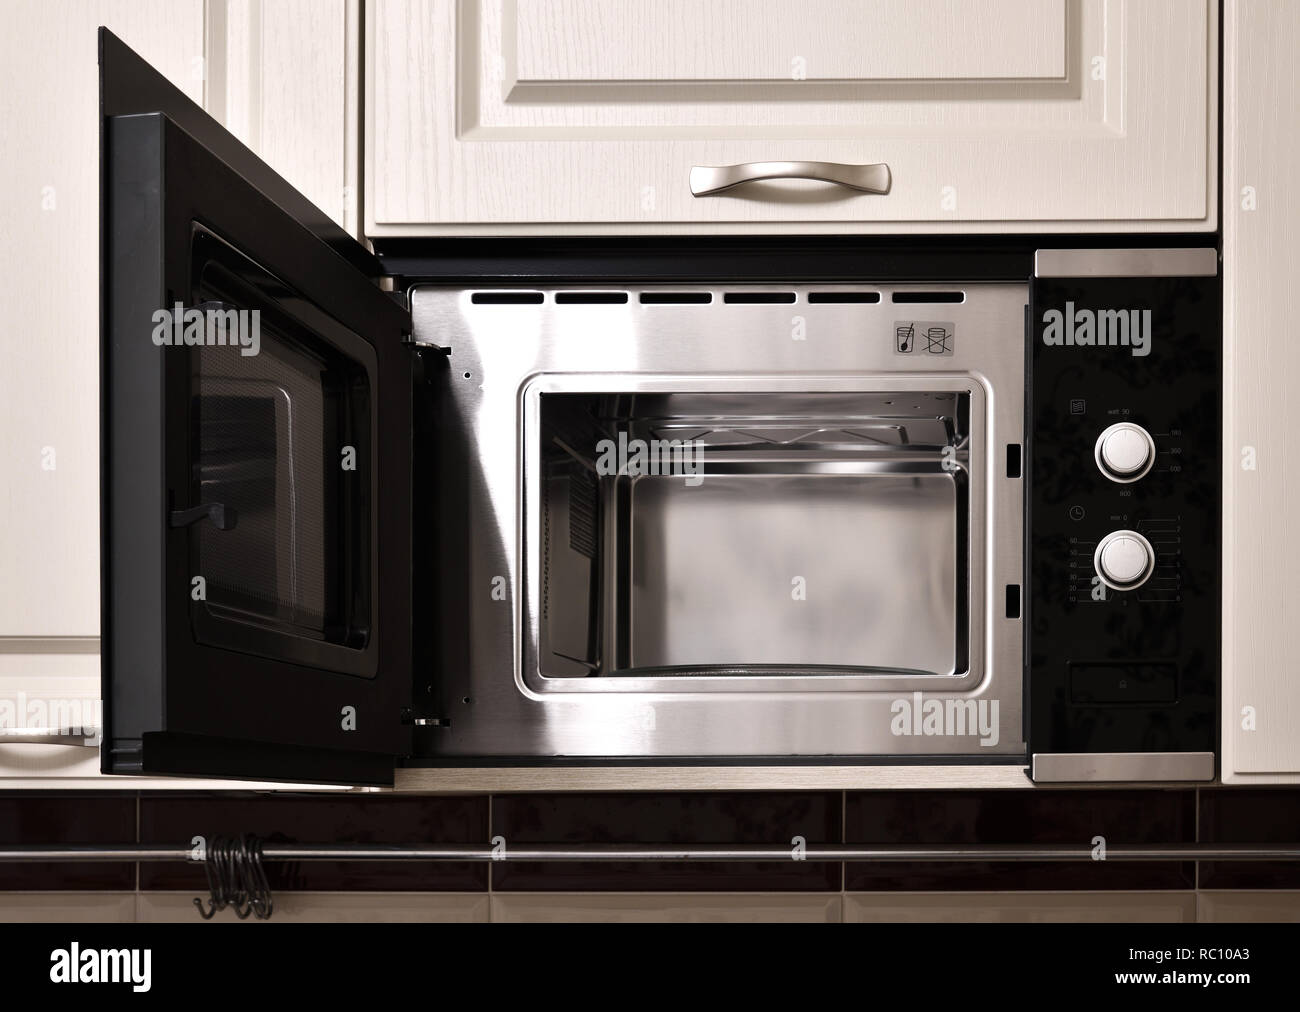 Leere Mikrowelle in der Küche Schrank öffnen Stockfotografie - Alamy